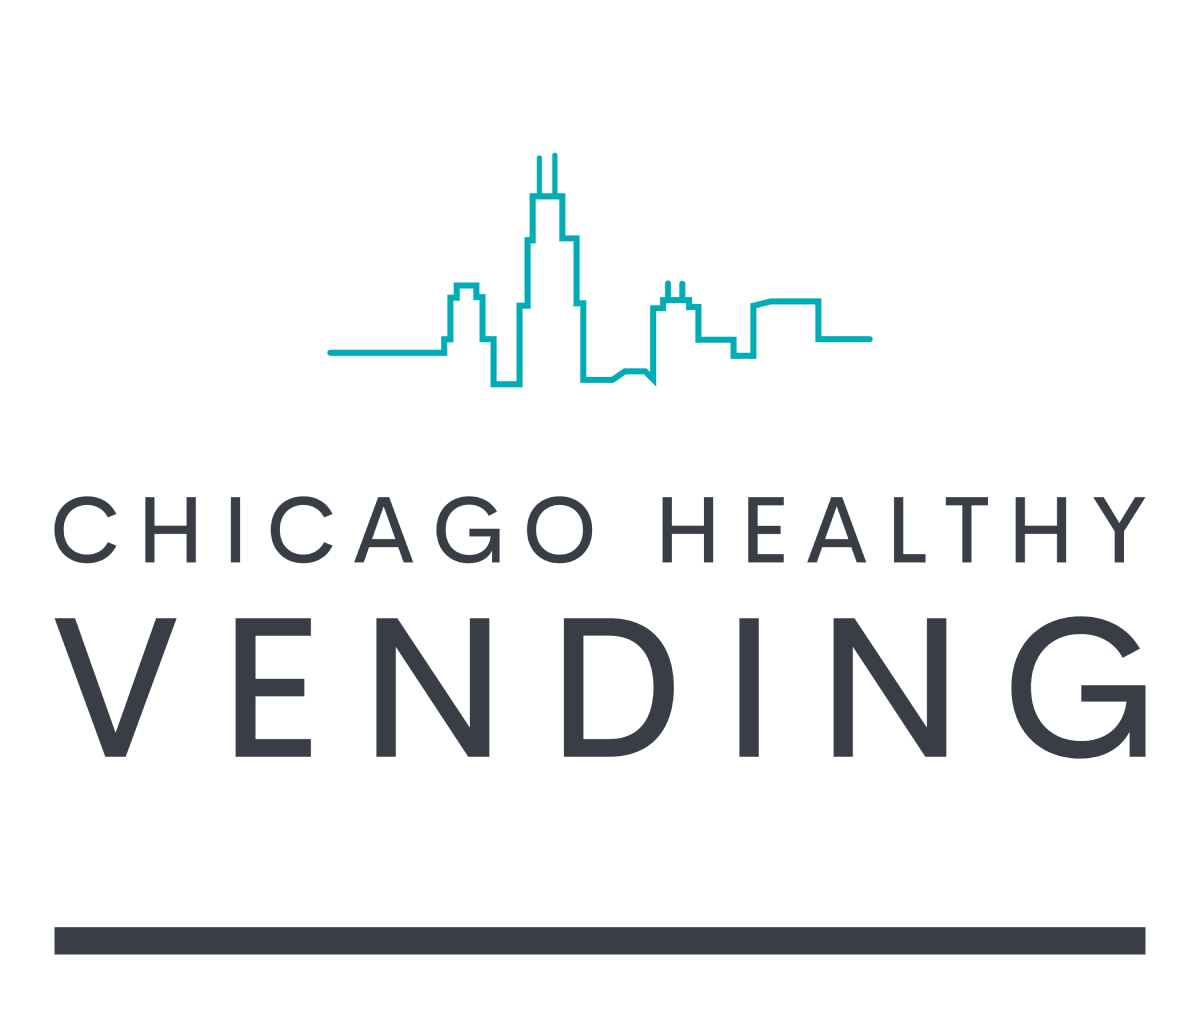 Chicago Healthy Vending